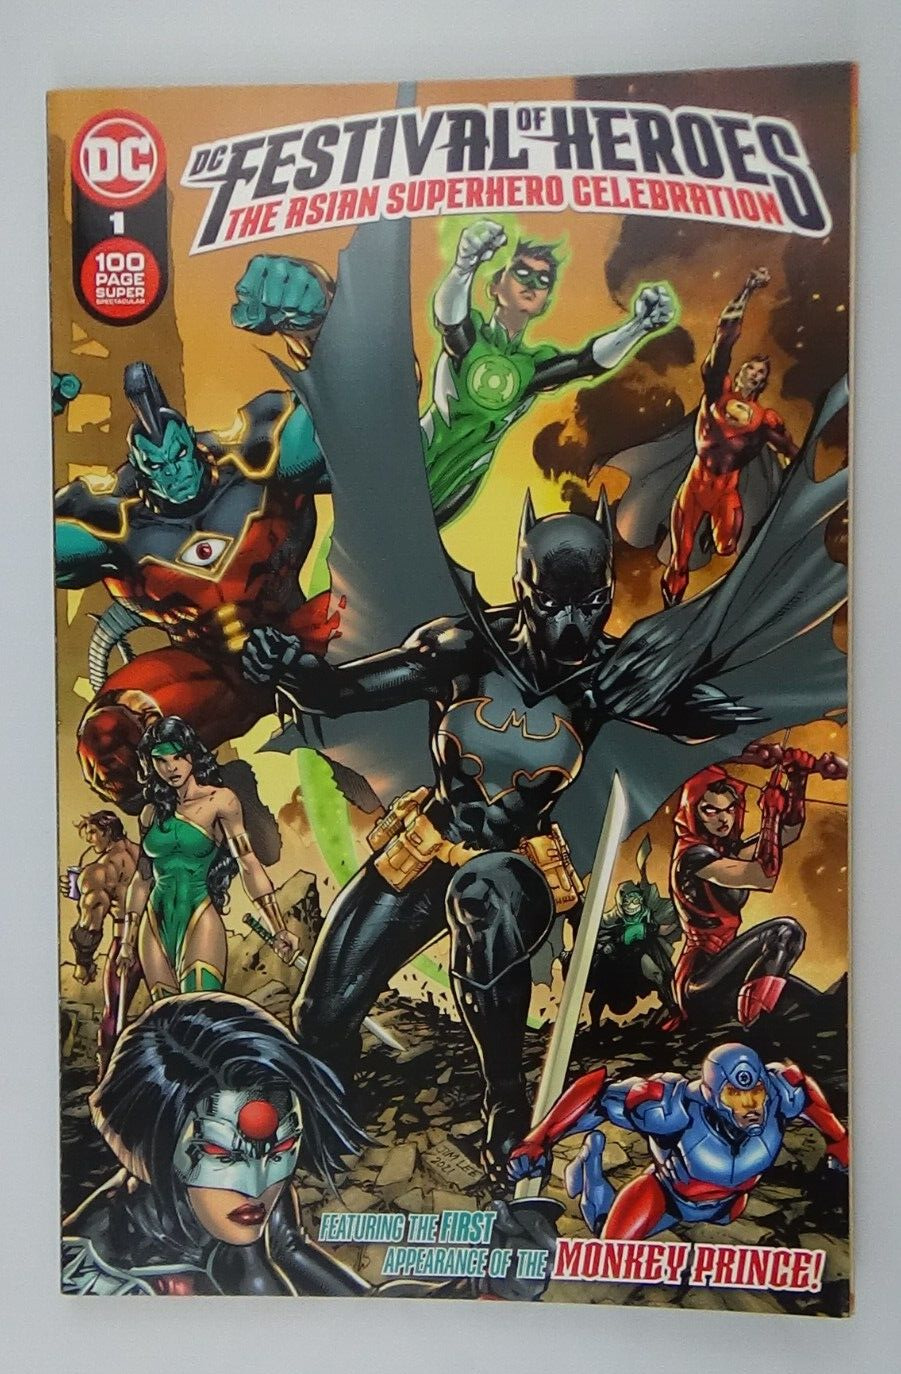 DC Festival of Heroes The Asian Superhero Celebration (DC, 2021) Paperback #011